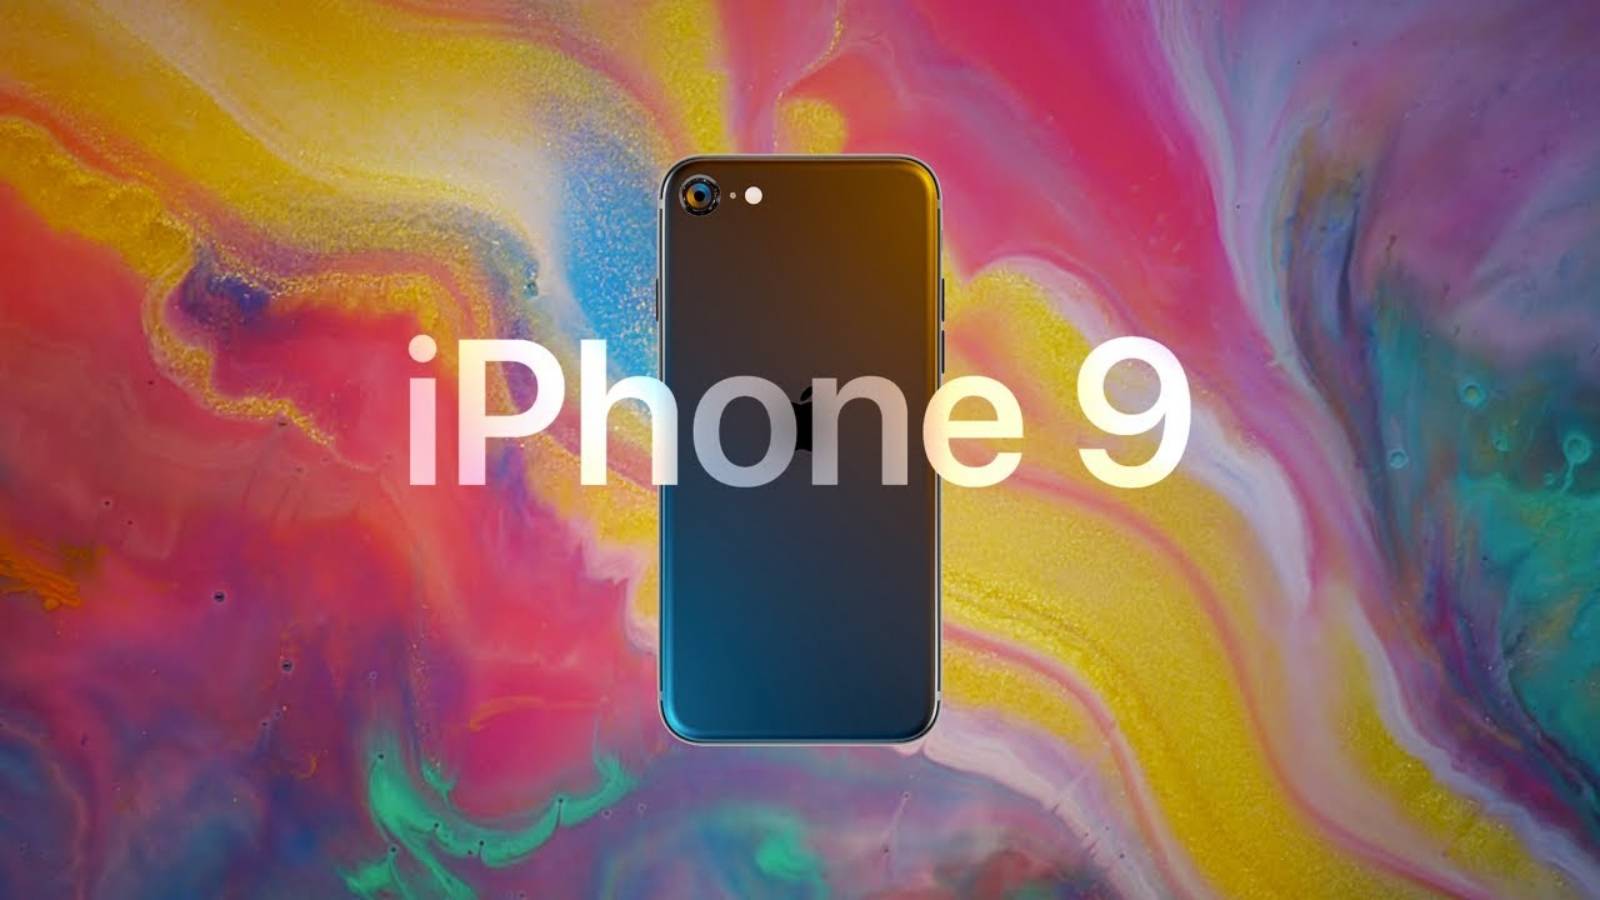 iOS 14 release iPhone 9